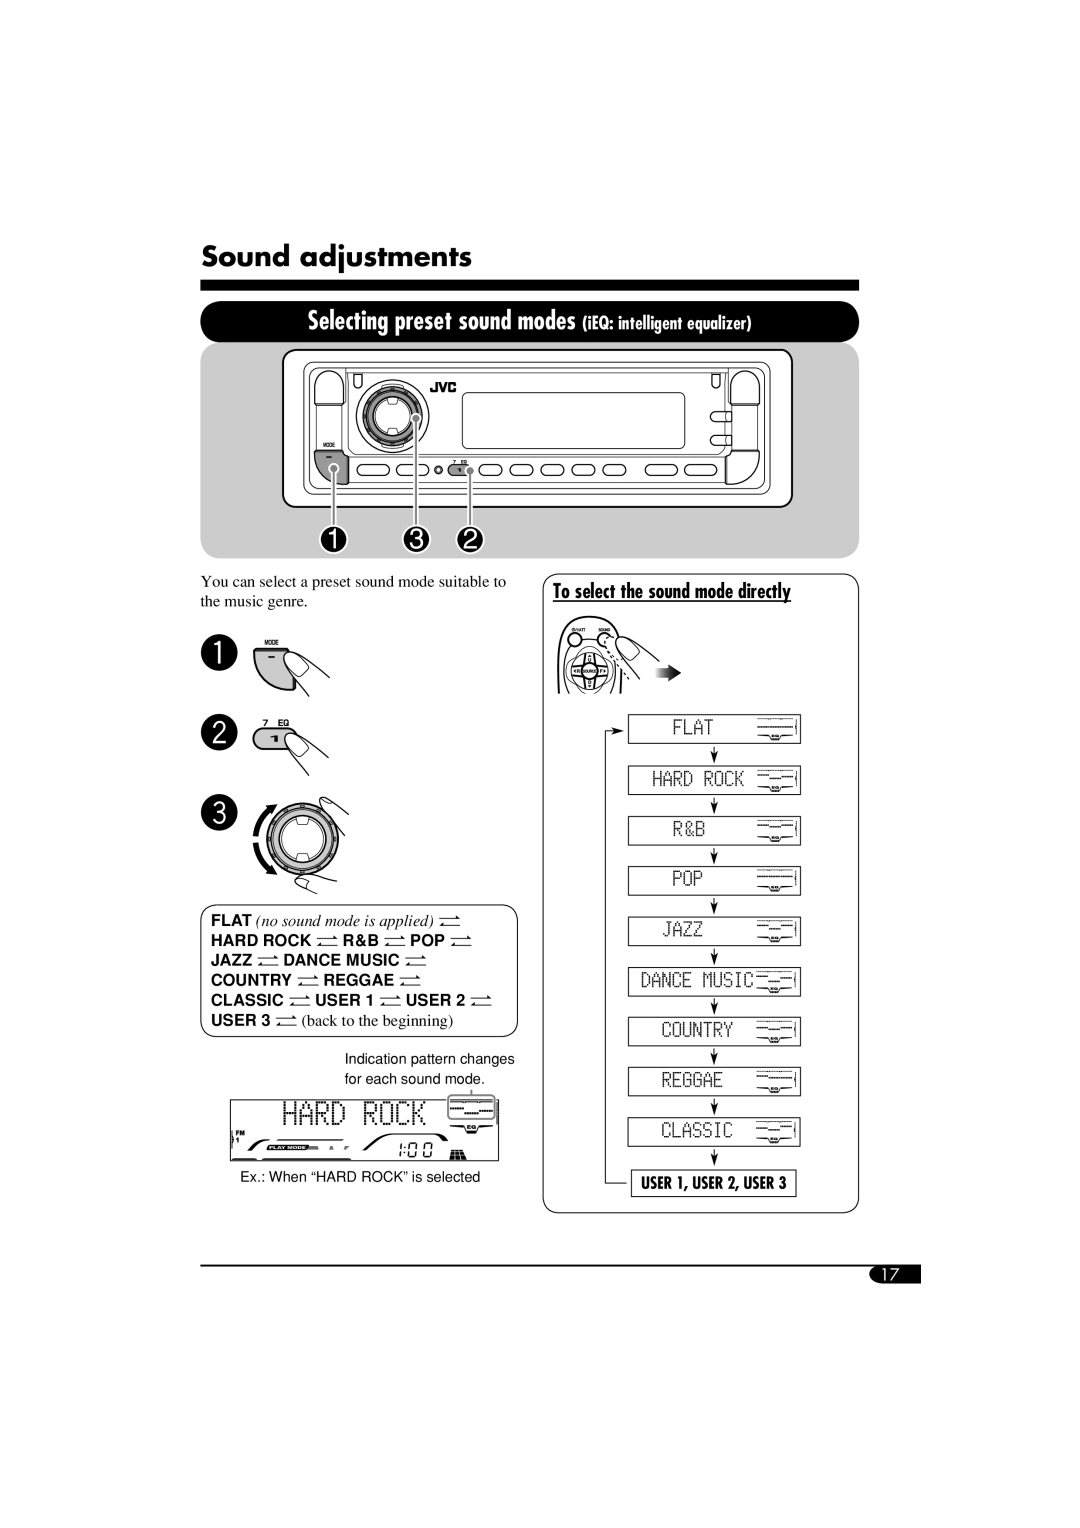 JVC KD-G814 manual Sound adjustments, To select the sound mode directly, Hard Rock “ R&B “ Pop “ Jazz “ Dance Music “ 